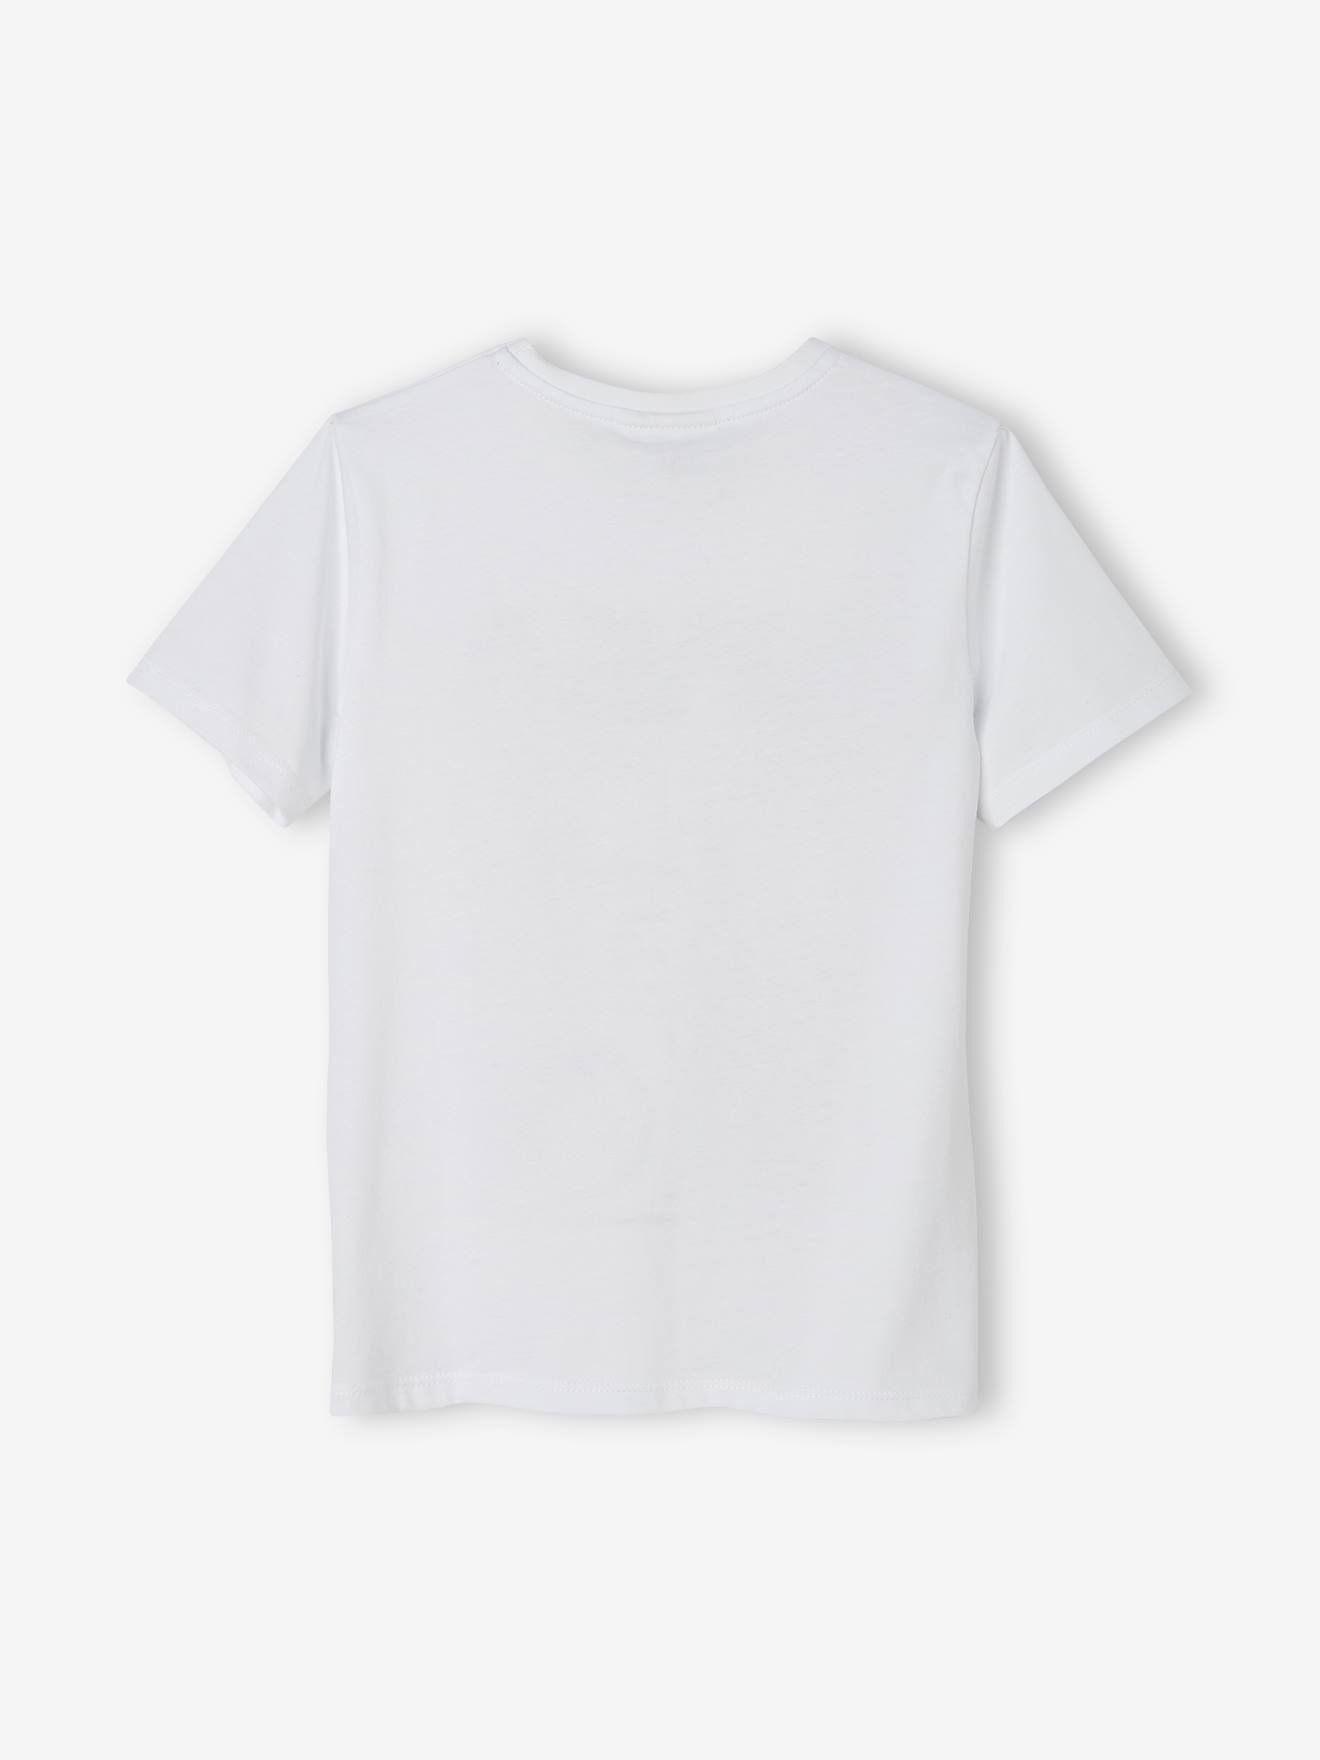 NASA® T-Shirt for Boys Boys white, 